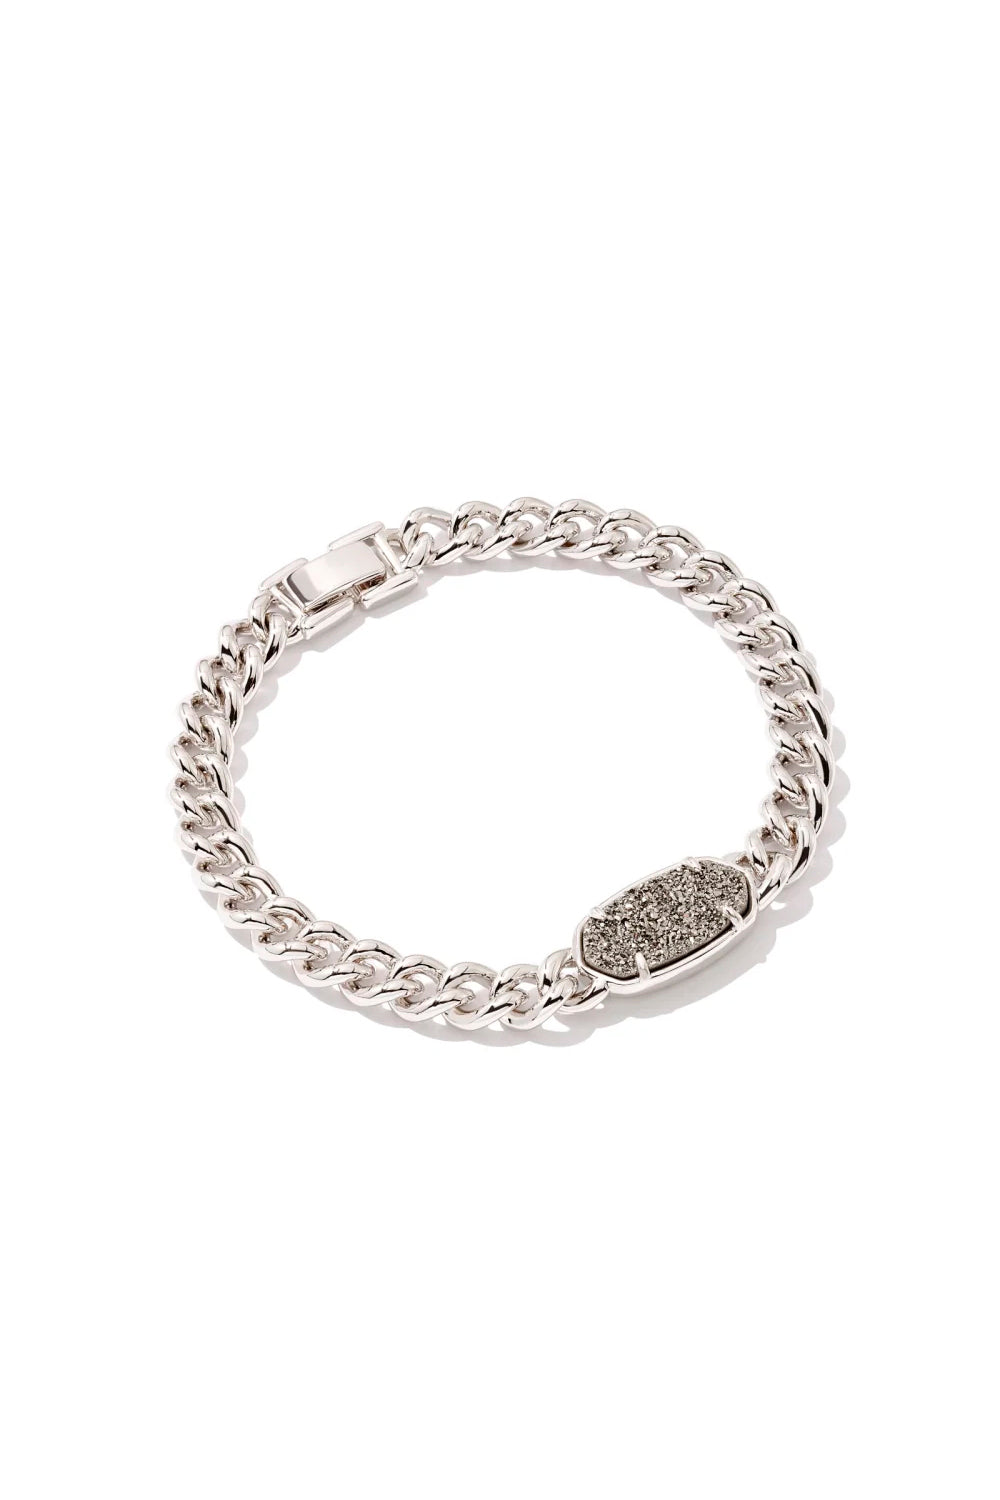 Kendra Scott: Elaina Silver Chain Bracelet - Platinum Drusy | Makk Fashions